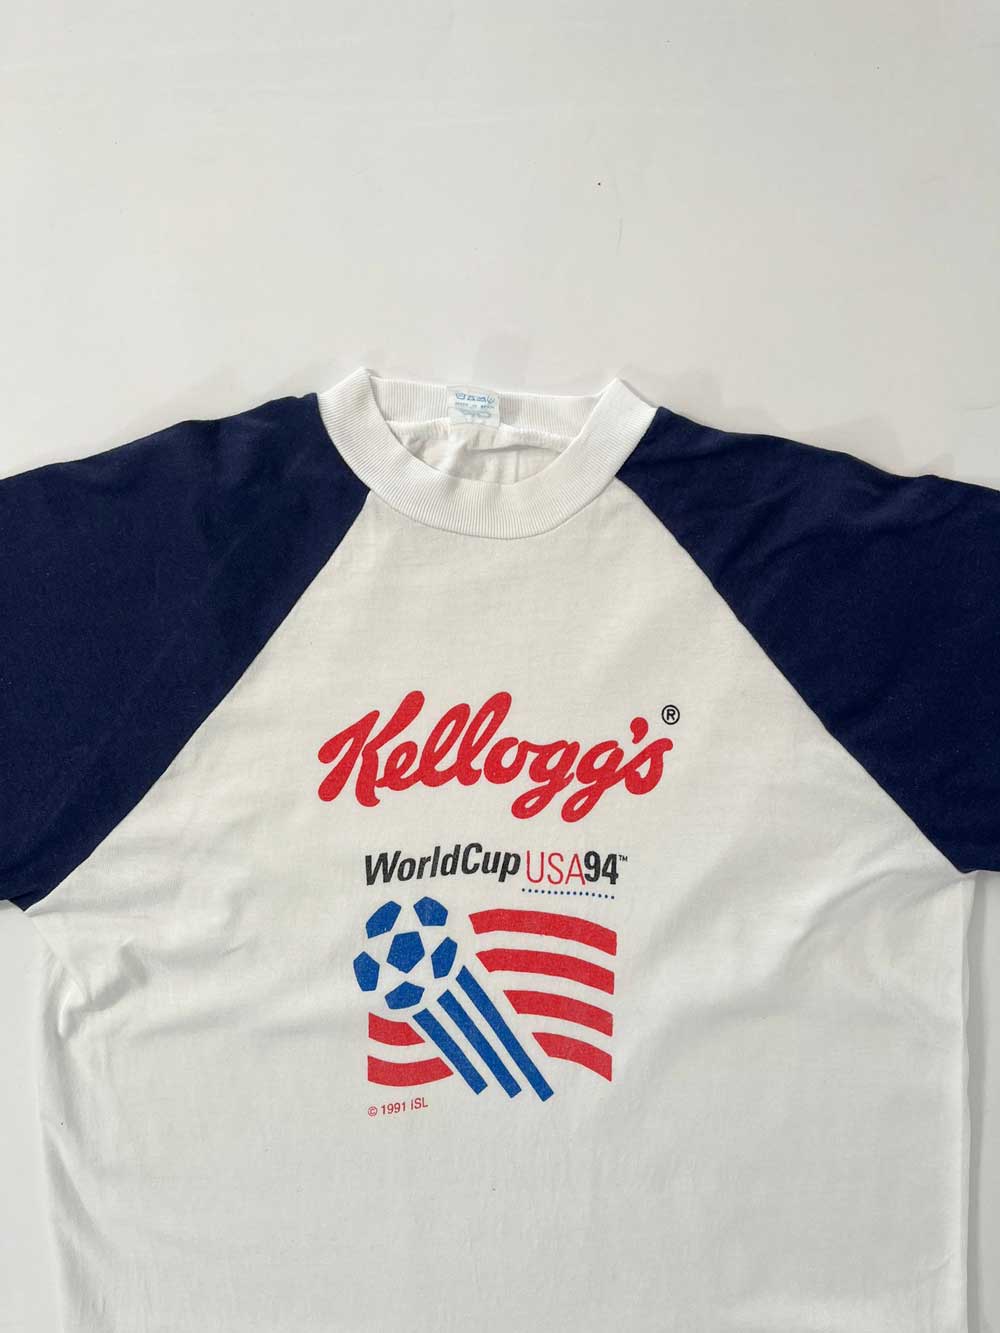 WorldCup USA94 Kellogg's T-shirt - S/M